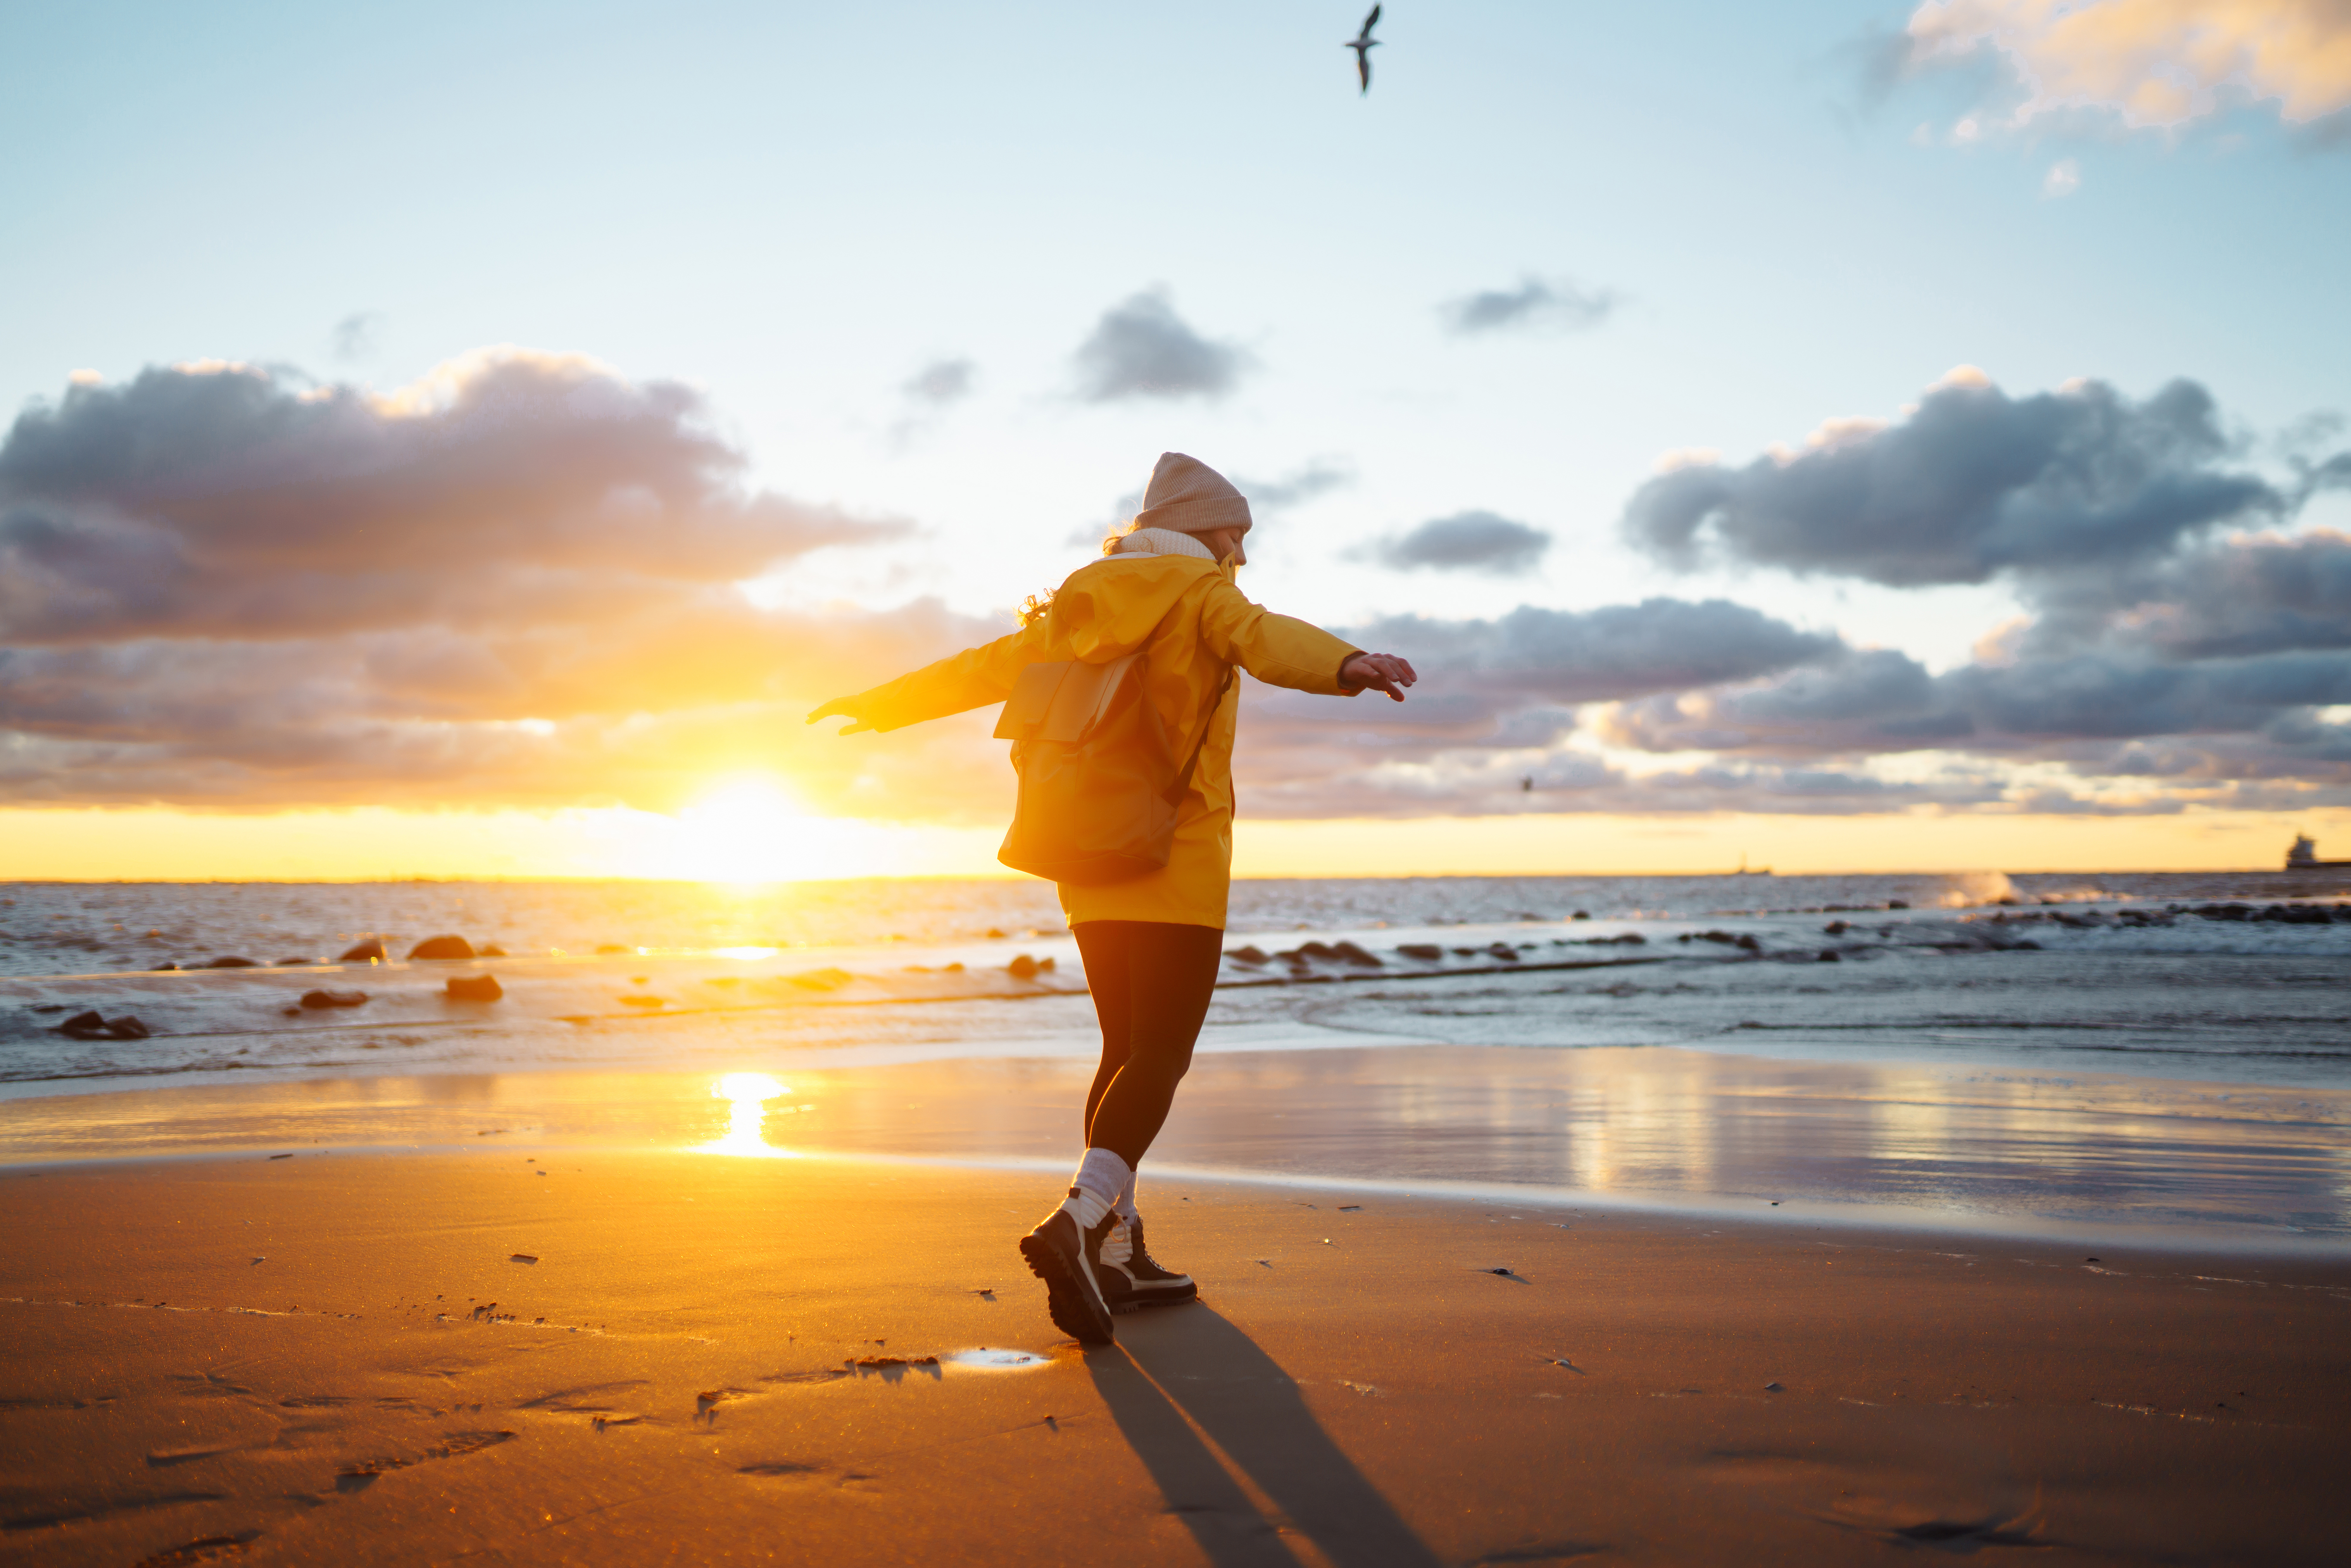 Tourist in yellow jacket enjoying sea landscape at sunset. Lifestyle, travel, nature, active life.